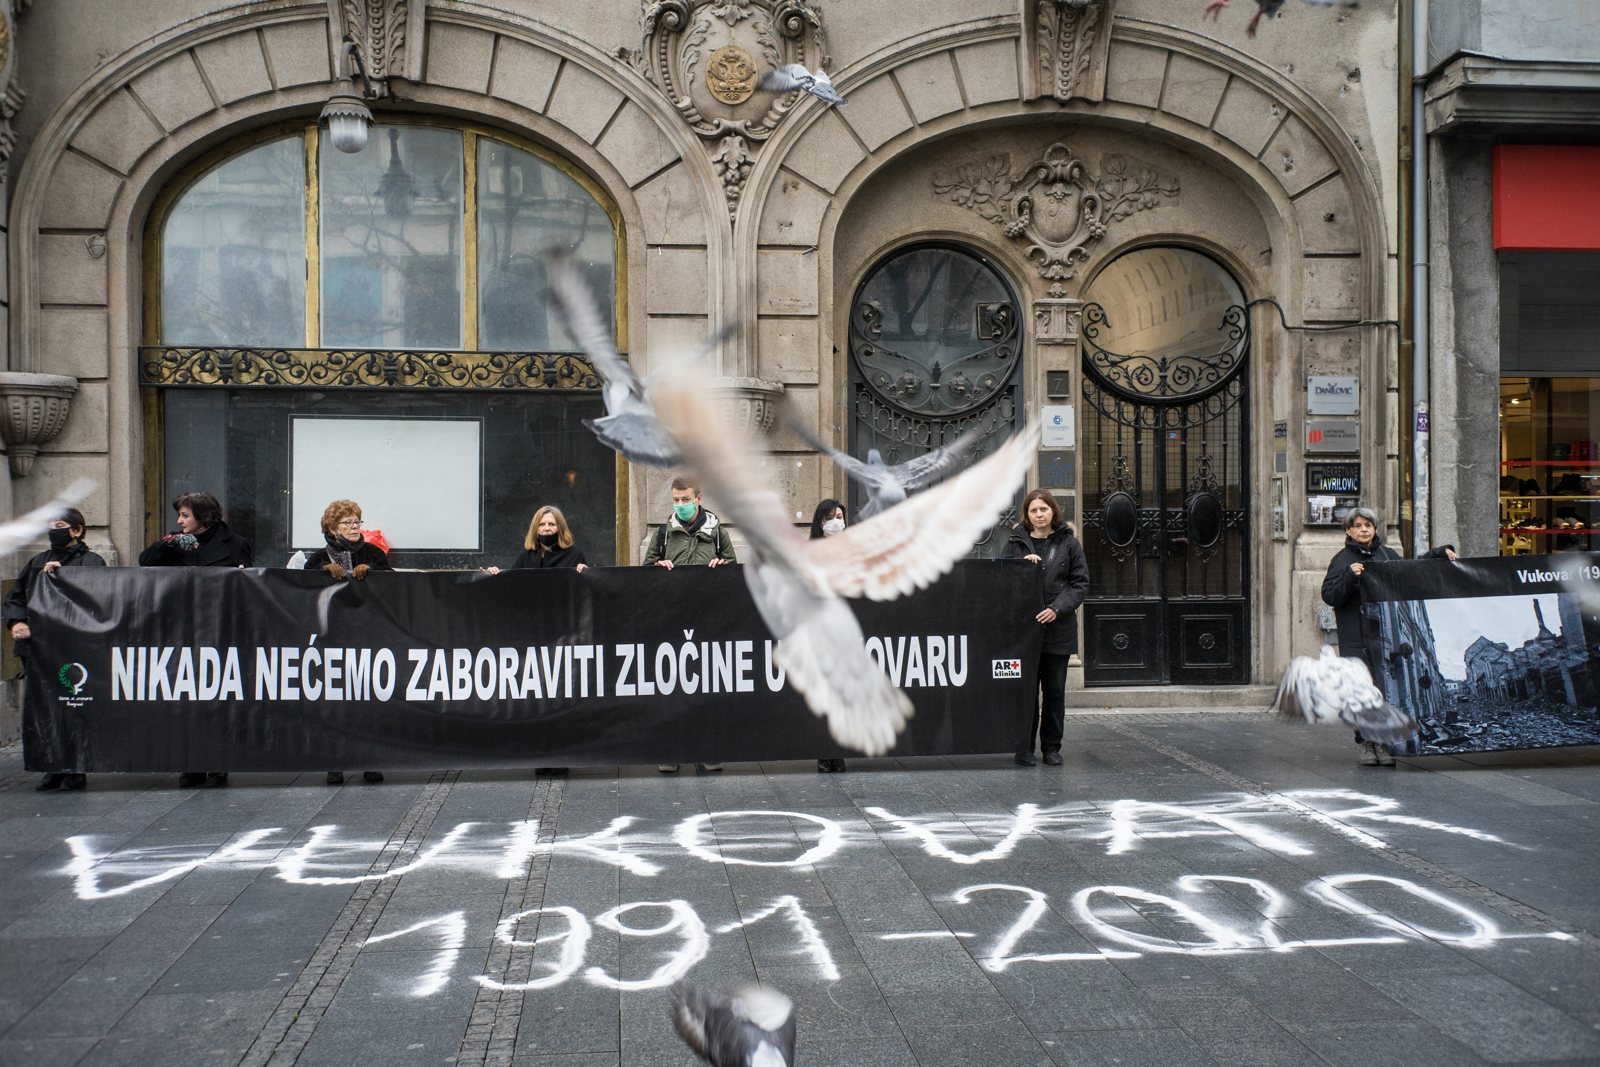 Women in Black Office in Belgrade Targeted with War Crime Graffiti